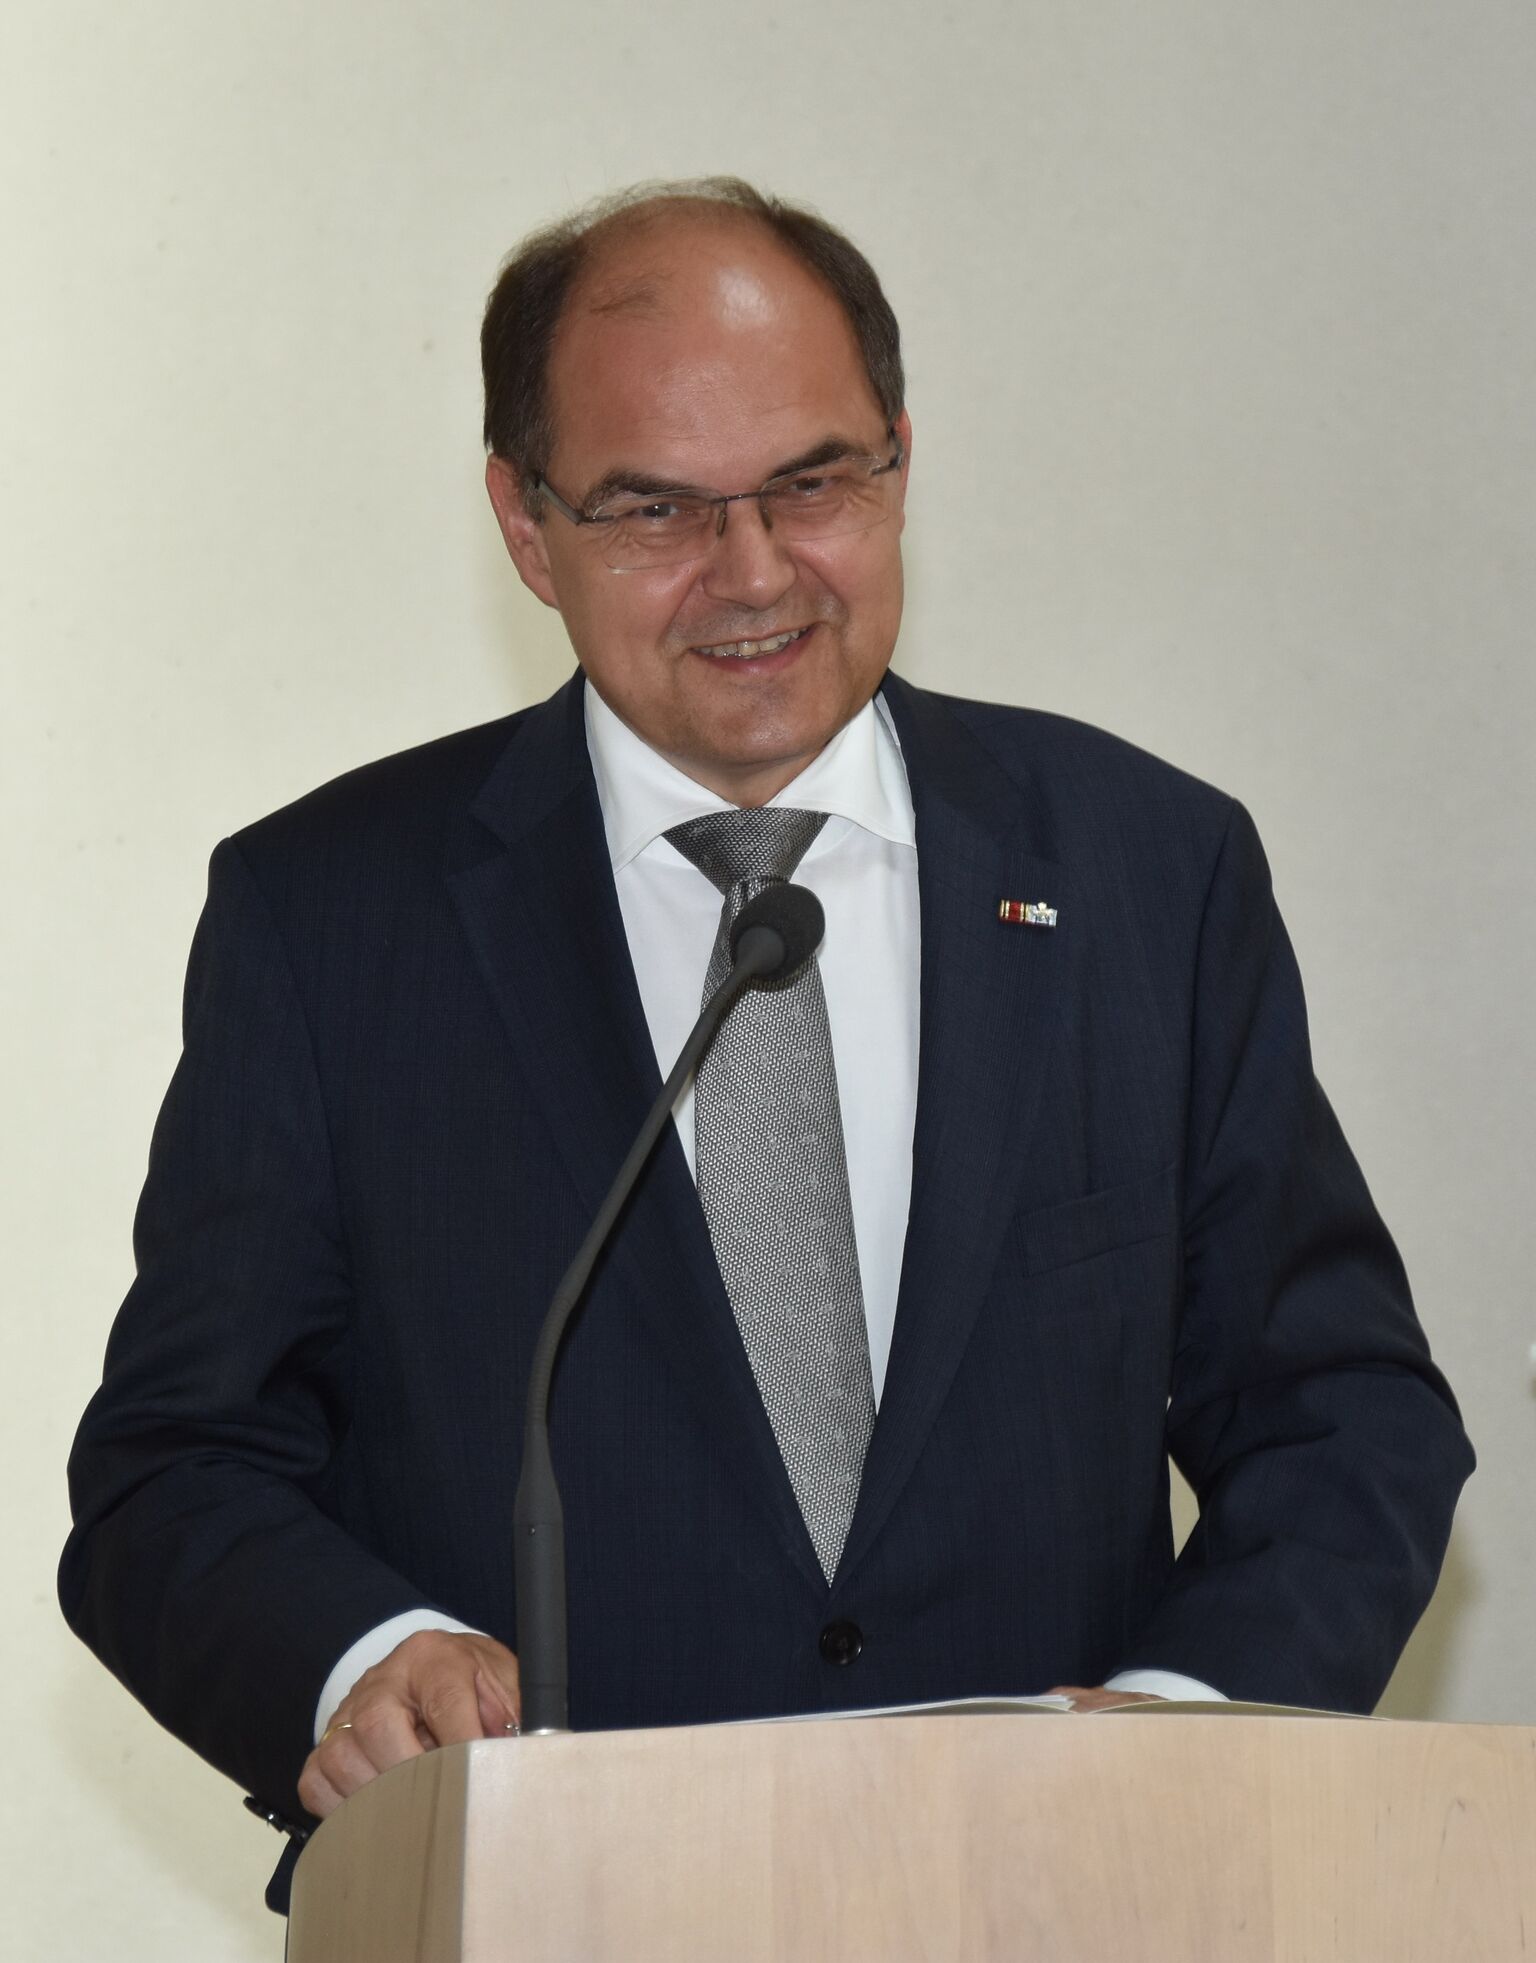 2017 07 26 Minister Schmidt